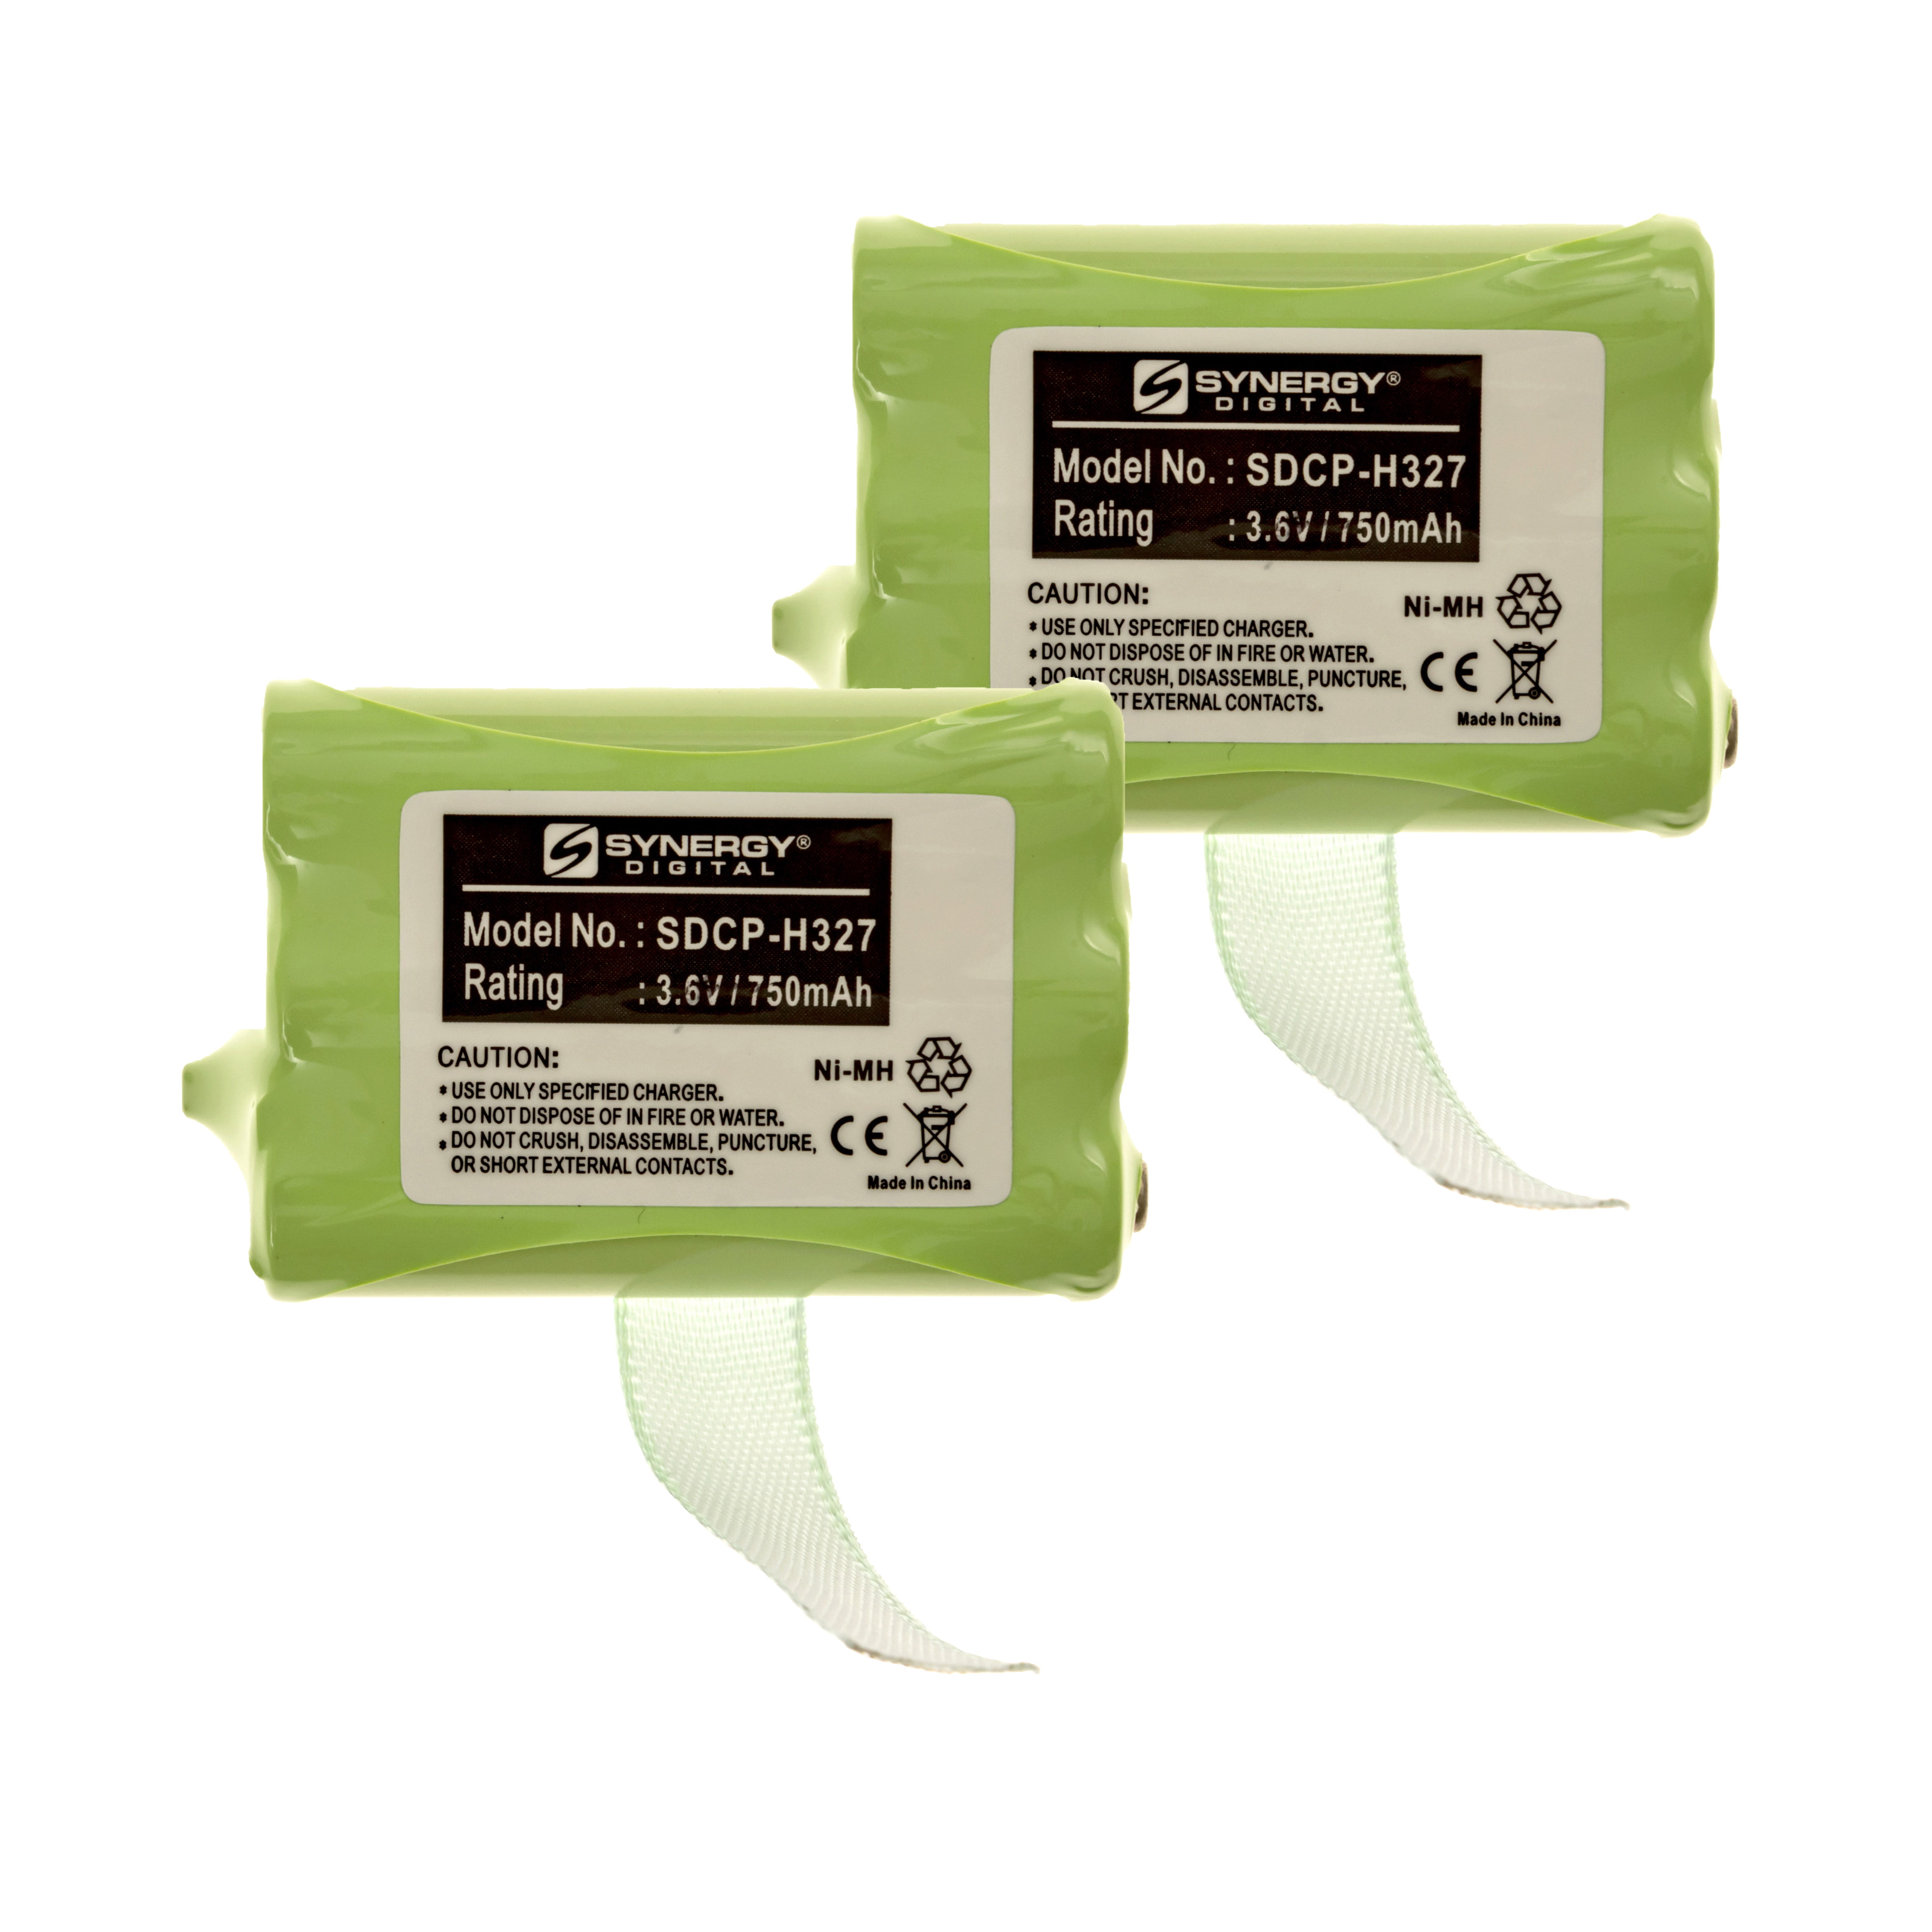 Set of 4 Replacement for Sennheiser BA2015 Cordless Phone Battery Synergy Digital Cordless Phone Batteries 